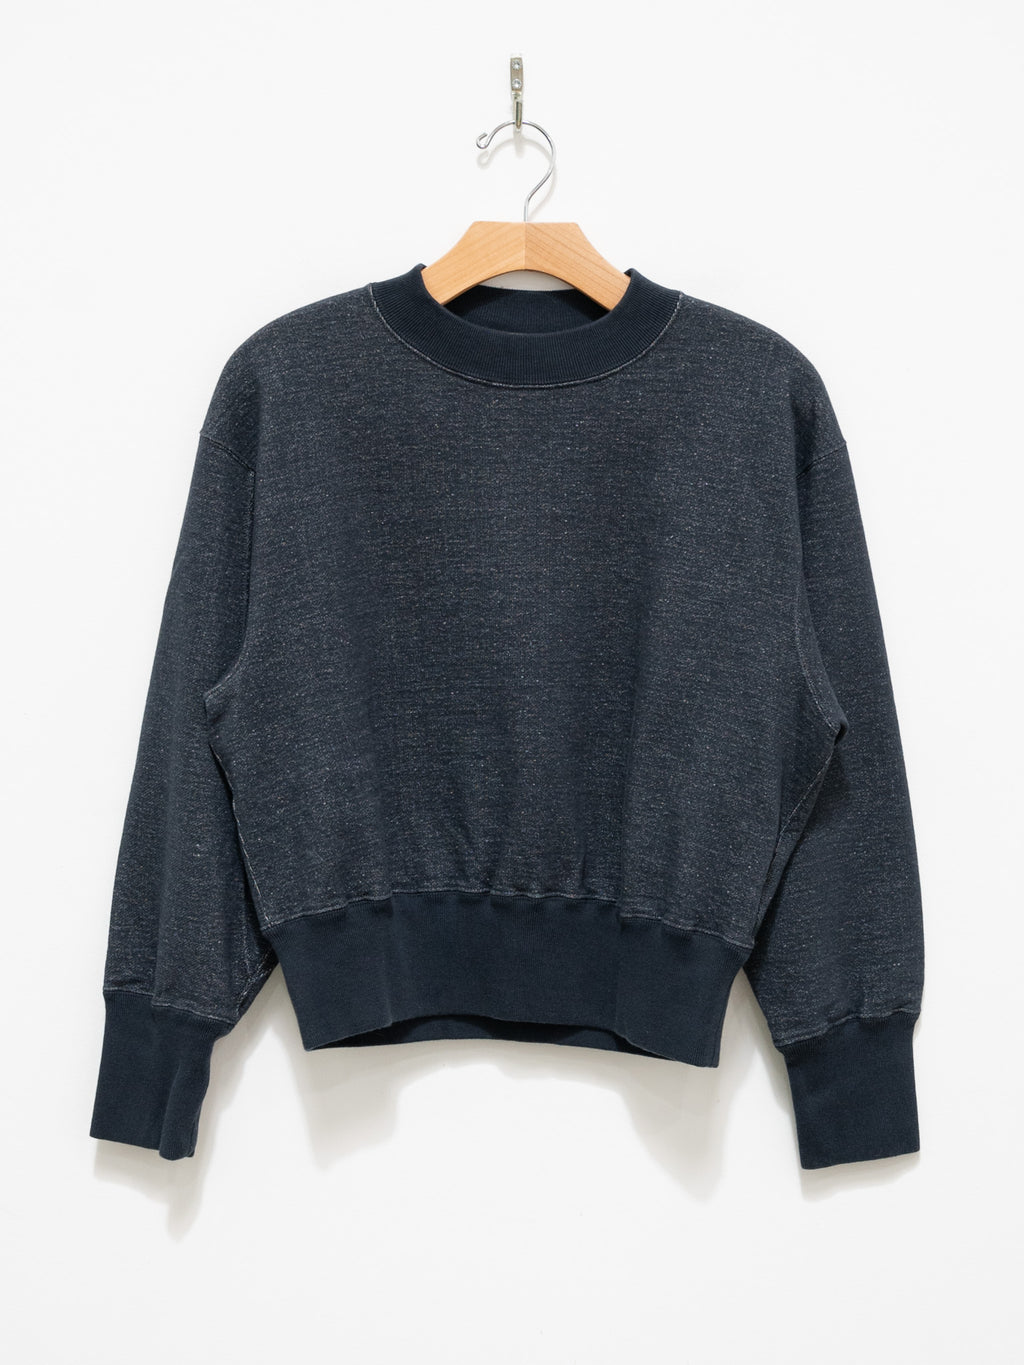 Namu Shop - Unfil Vintage Cotton Fleece Cropped Sweatshirt - Petrol Blue